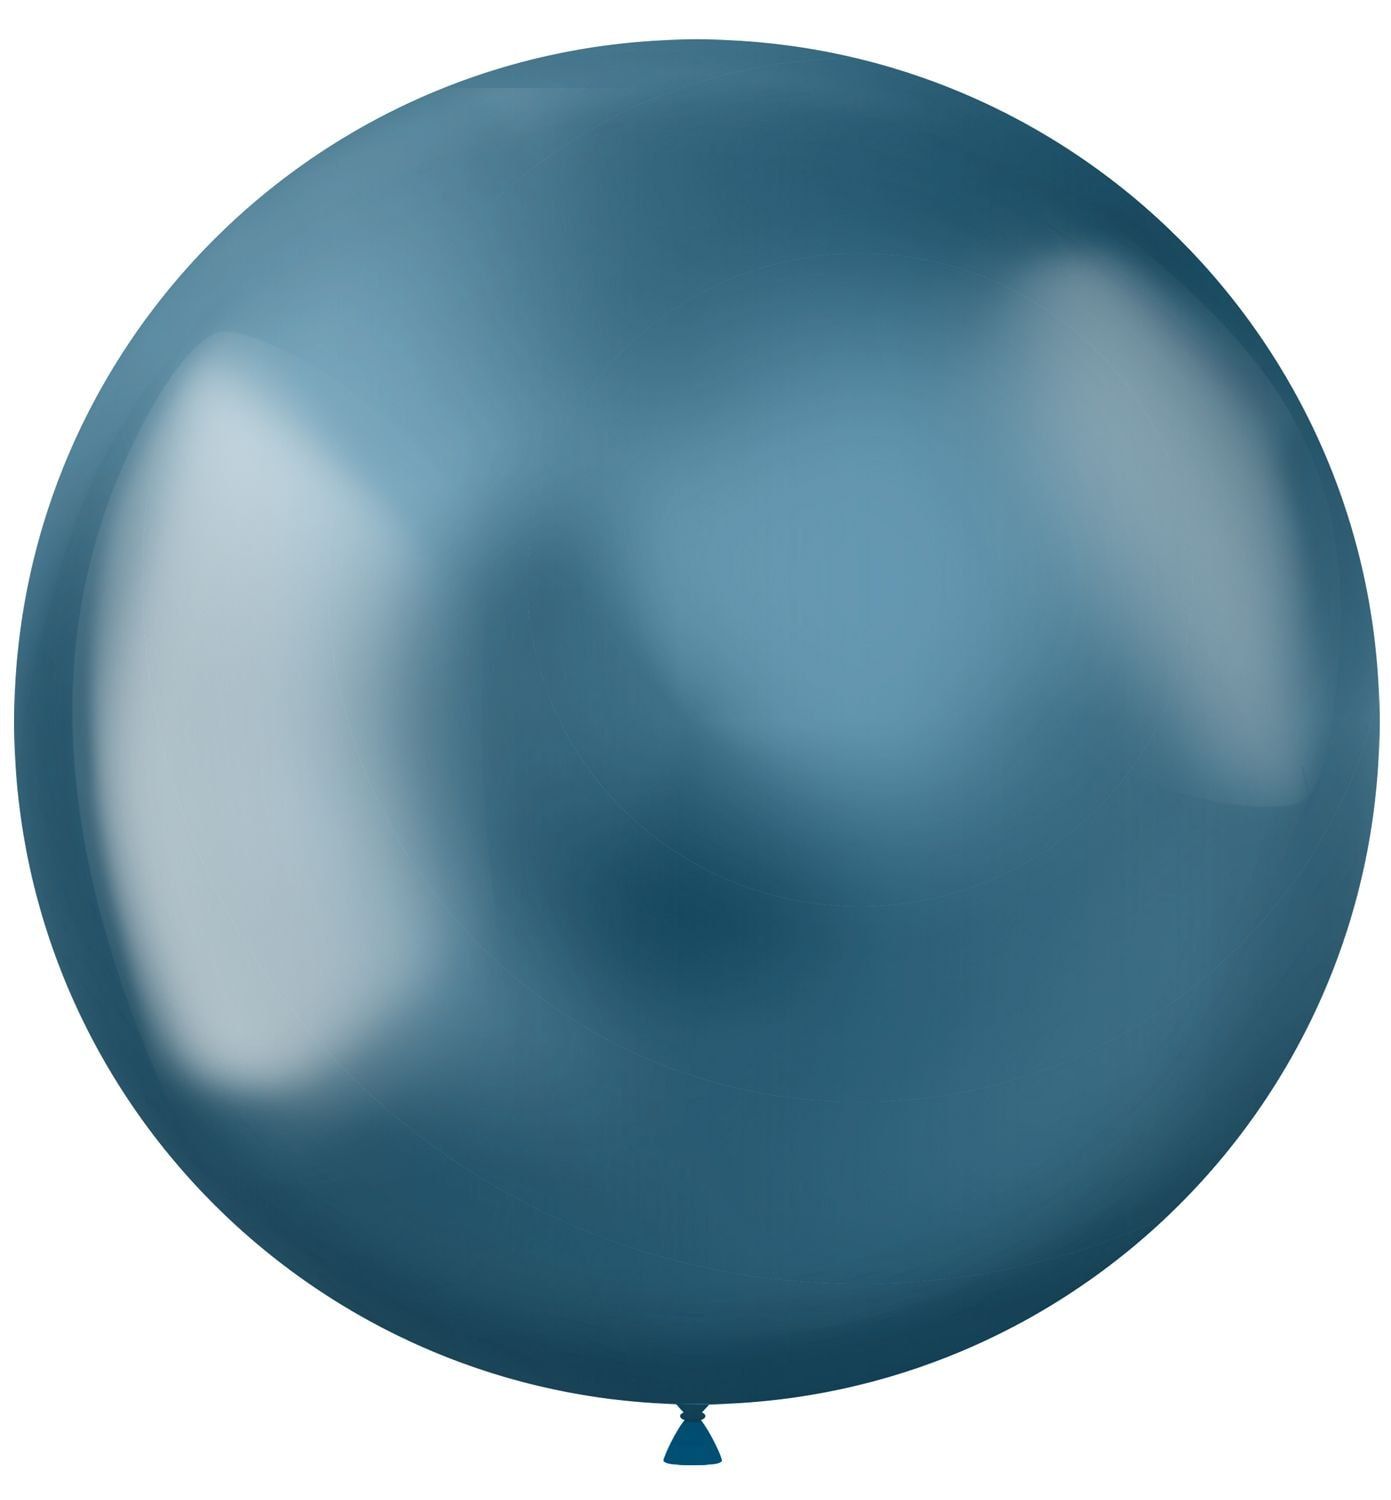 Intenst blauwe ballonnen groot